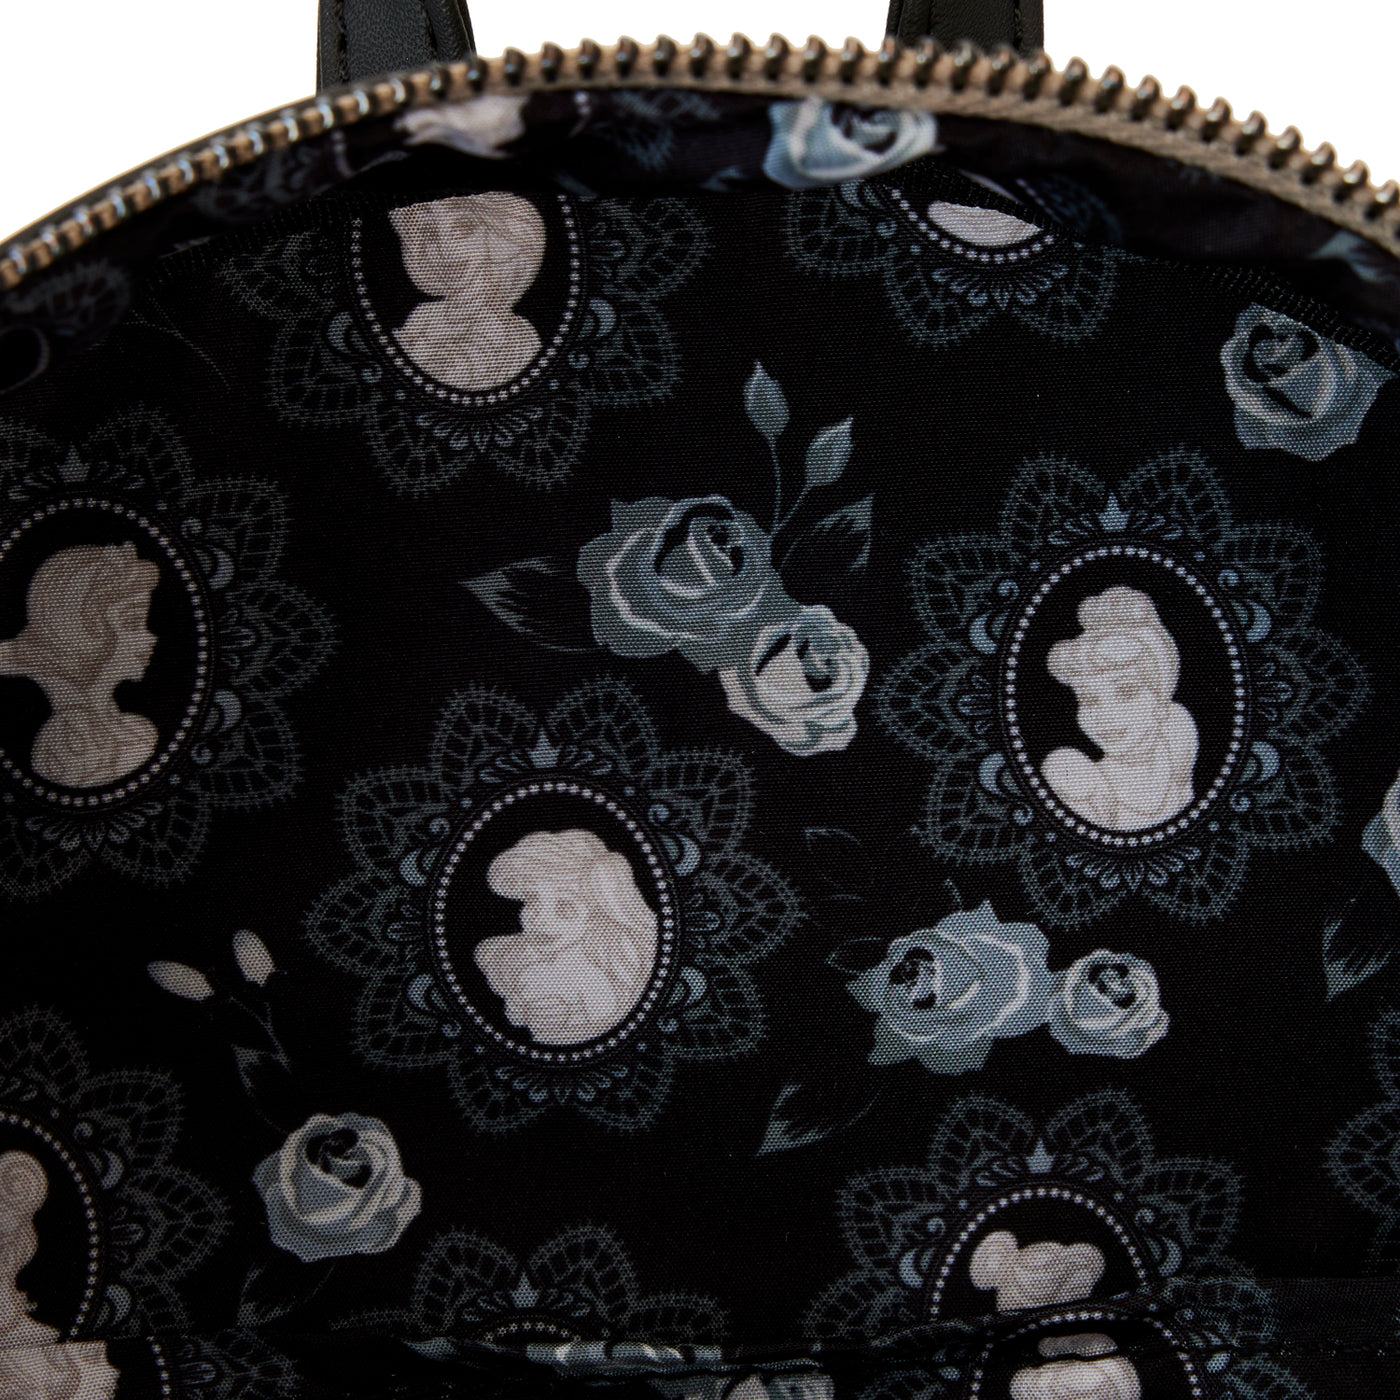 Disney Princess Cameos Mini Backpack